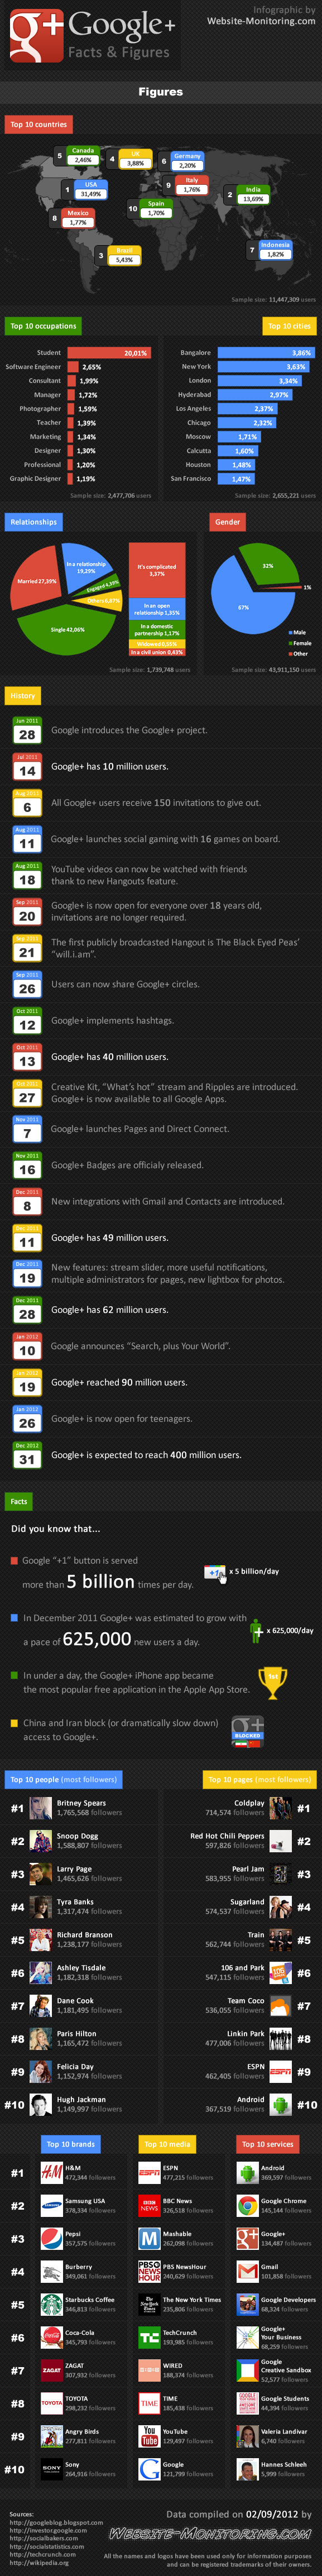 Google+ Facts Figures Statistics Infographic